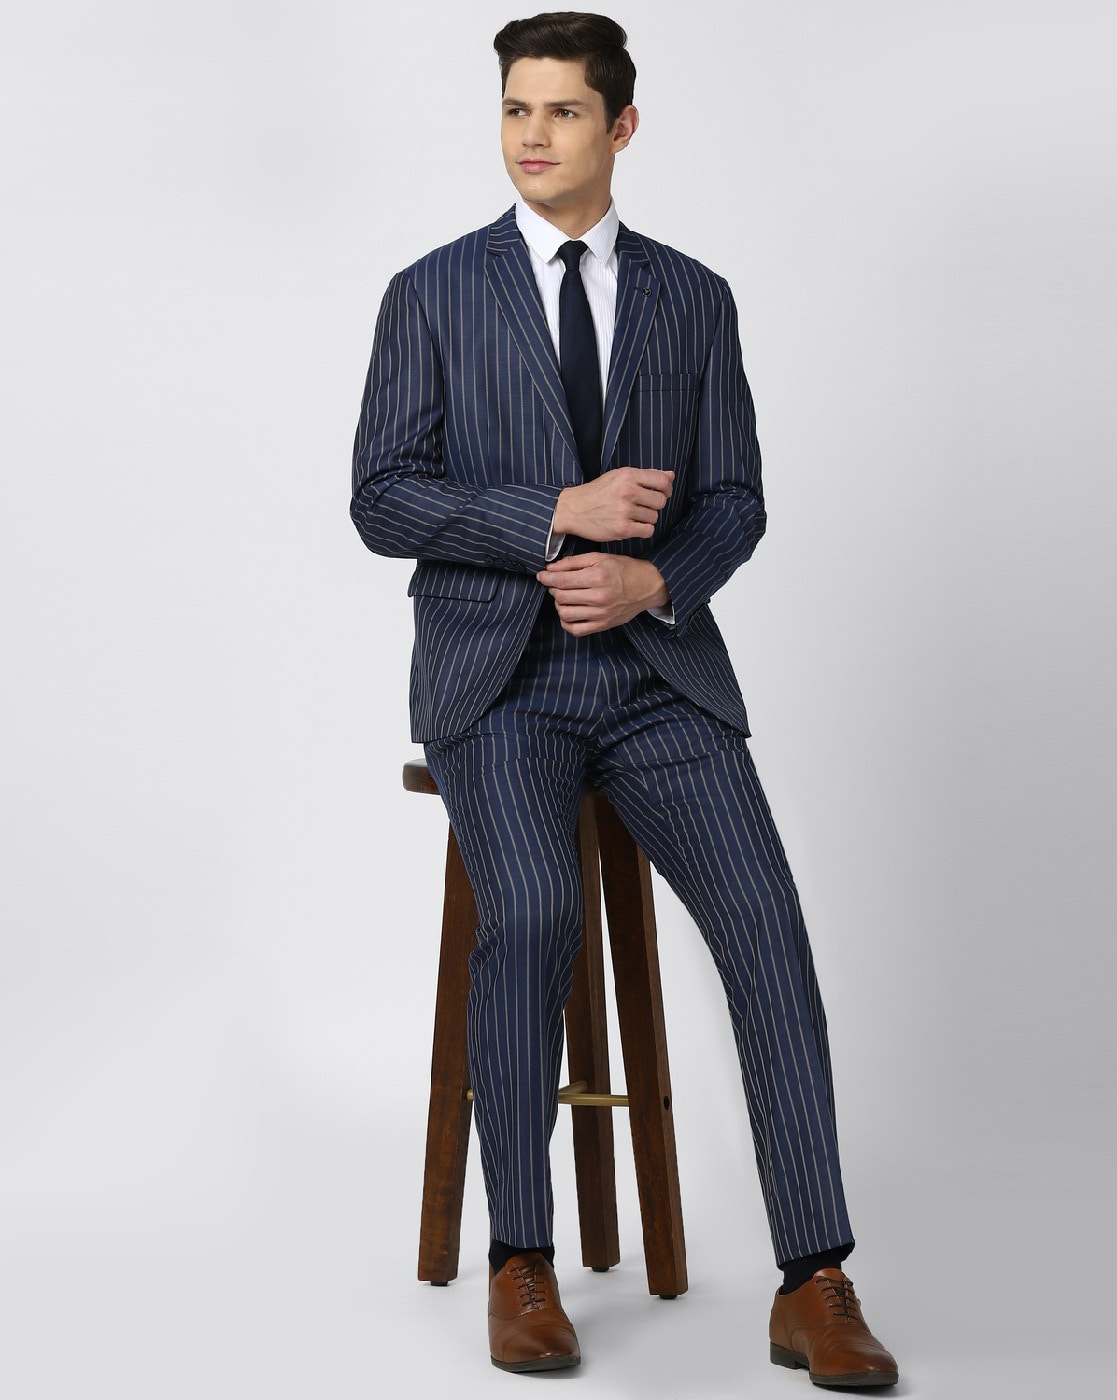 Men's Navy Blue Striped Suits Wedding Casual Party Groom Jacket Tuxedos  Custom | eBay